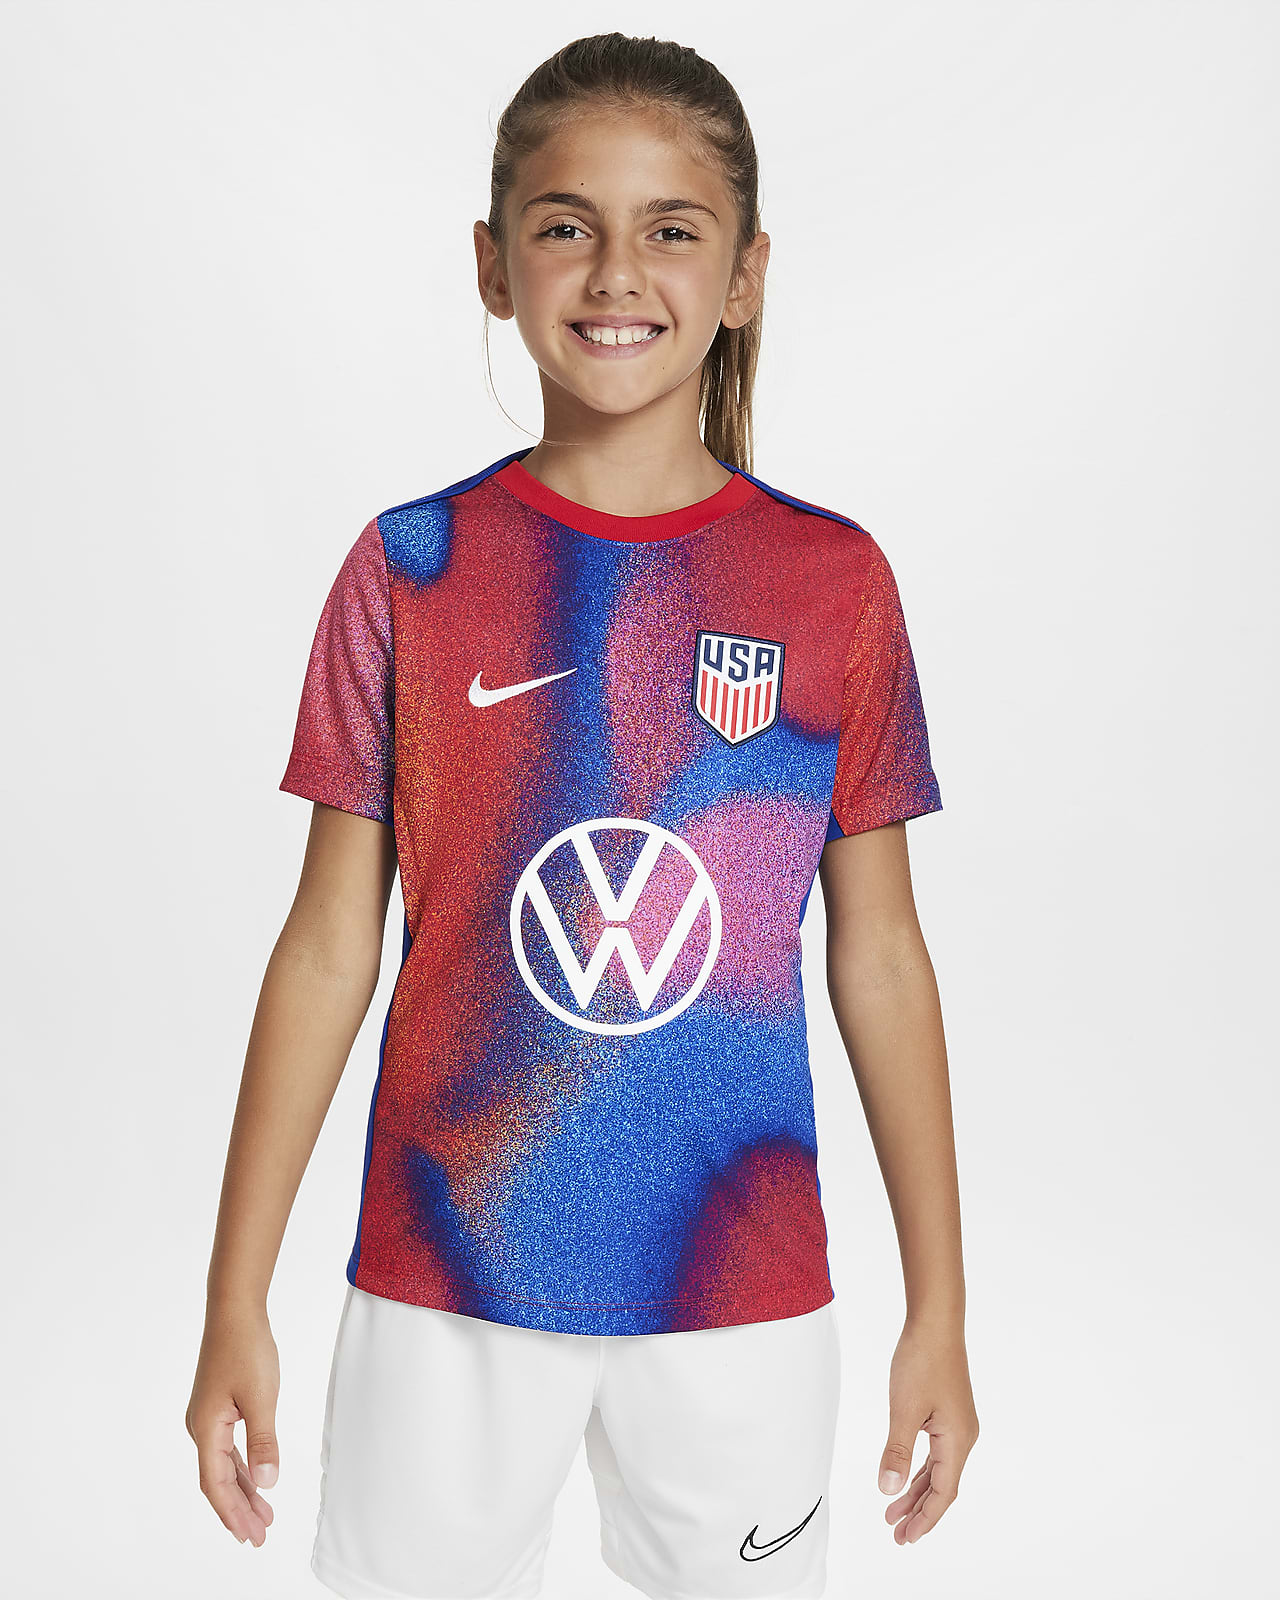 USMNT Academy Pro Big Kids' Nike Dri-FIT Soccer Pre-Match Short-Sleeve Top